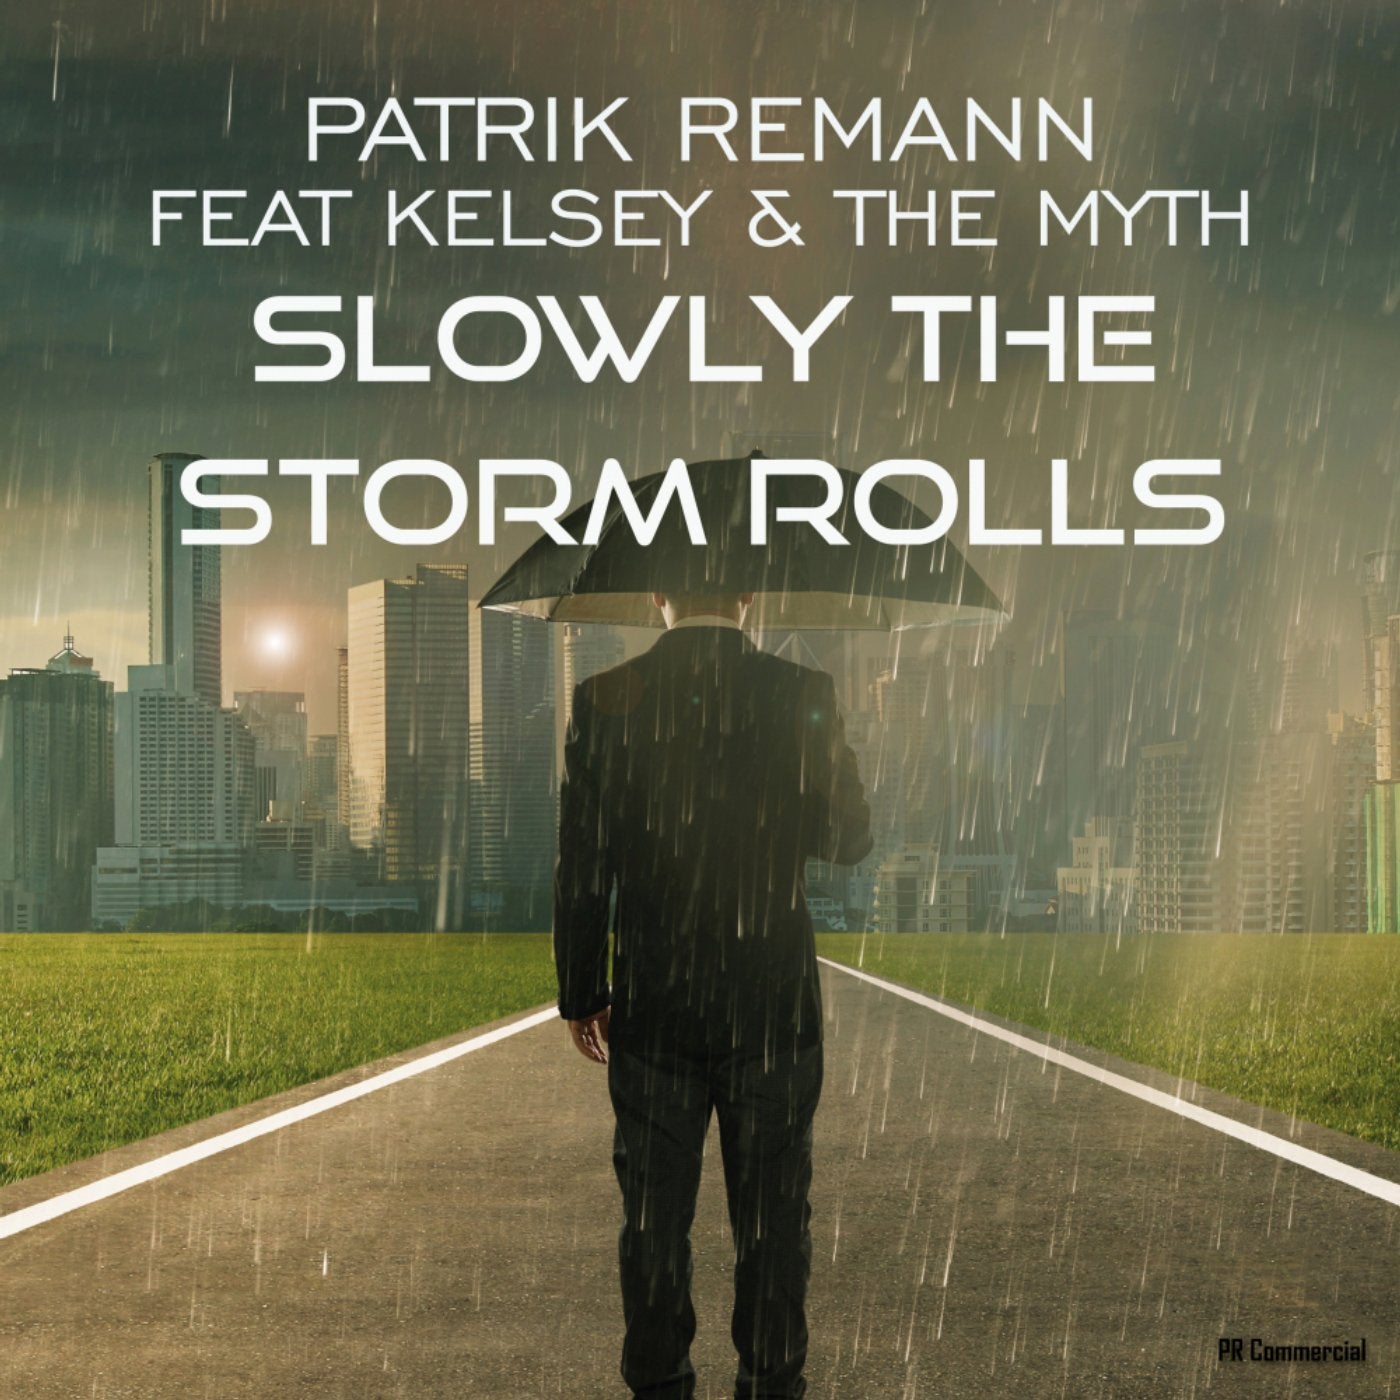 Slowly The Storm Rolls